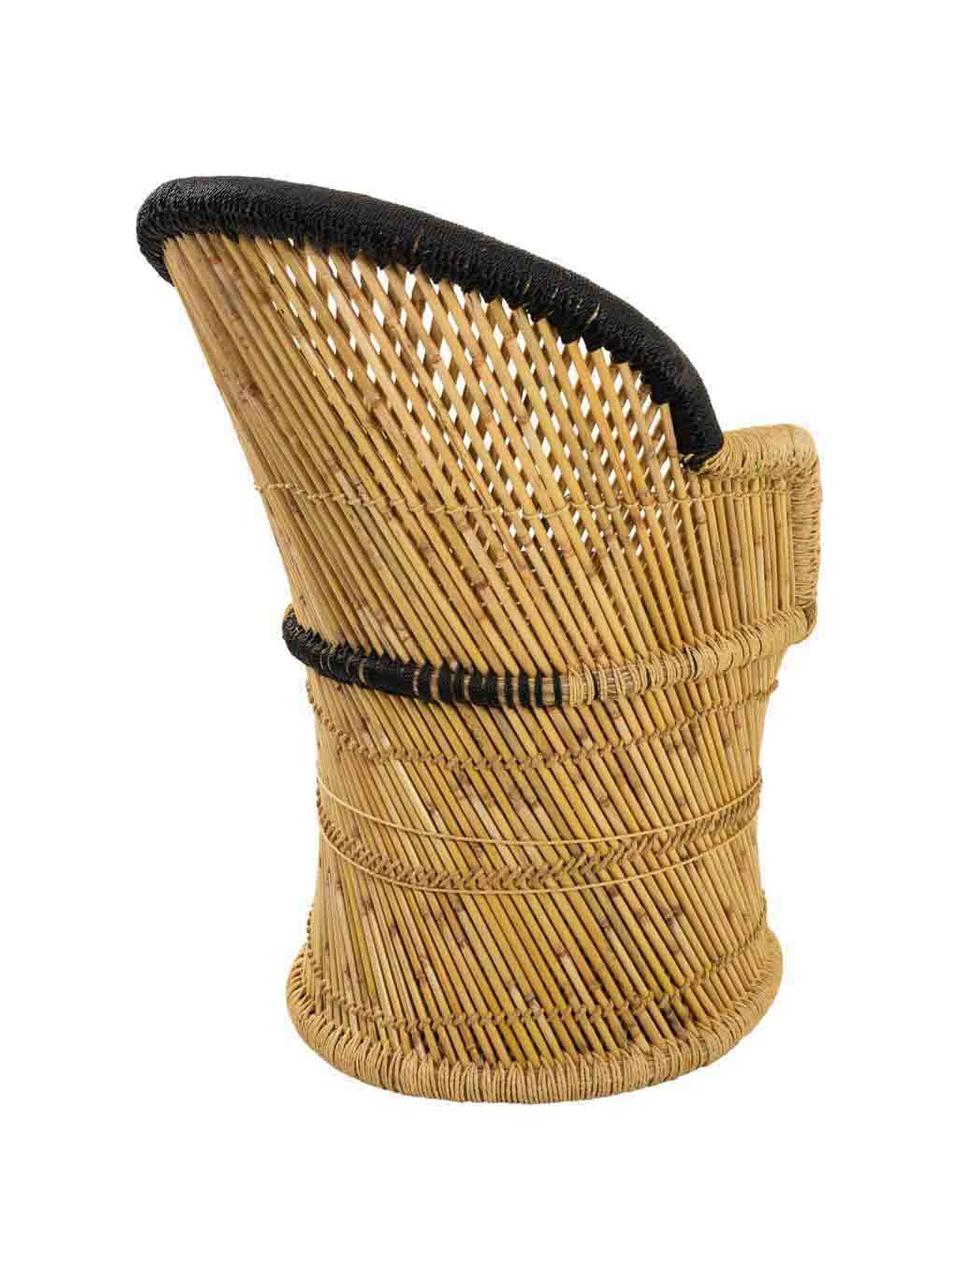 Venkovní bambusové křeslo Ariadna, Bambusové dřevo, lano, Bambus, černá, Š 46 cm, H 63 cm